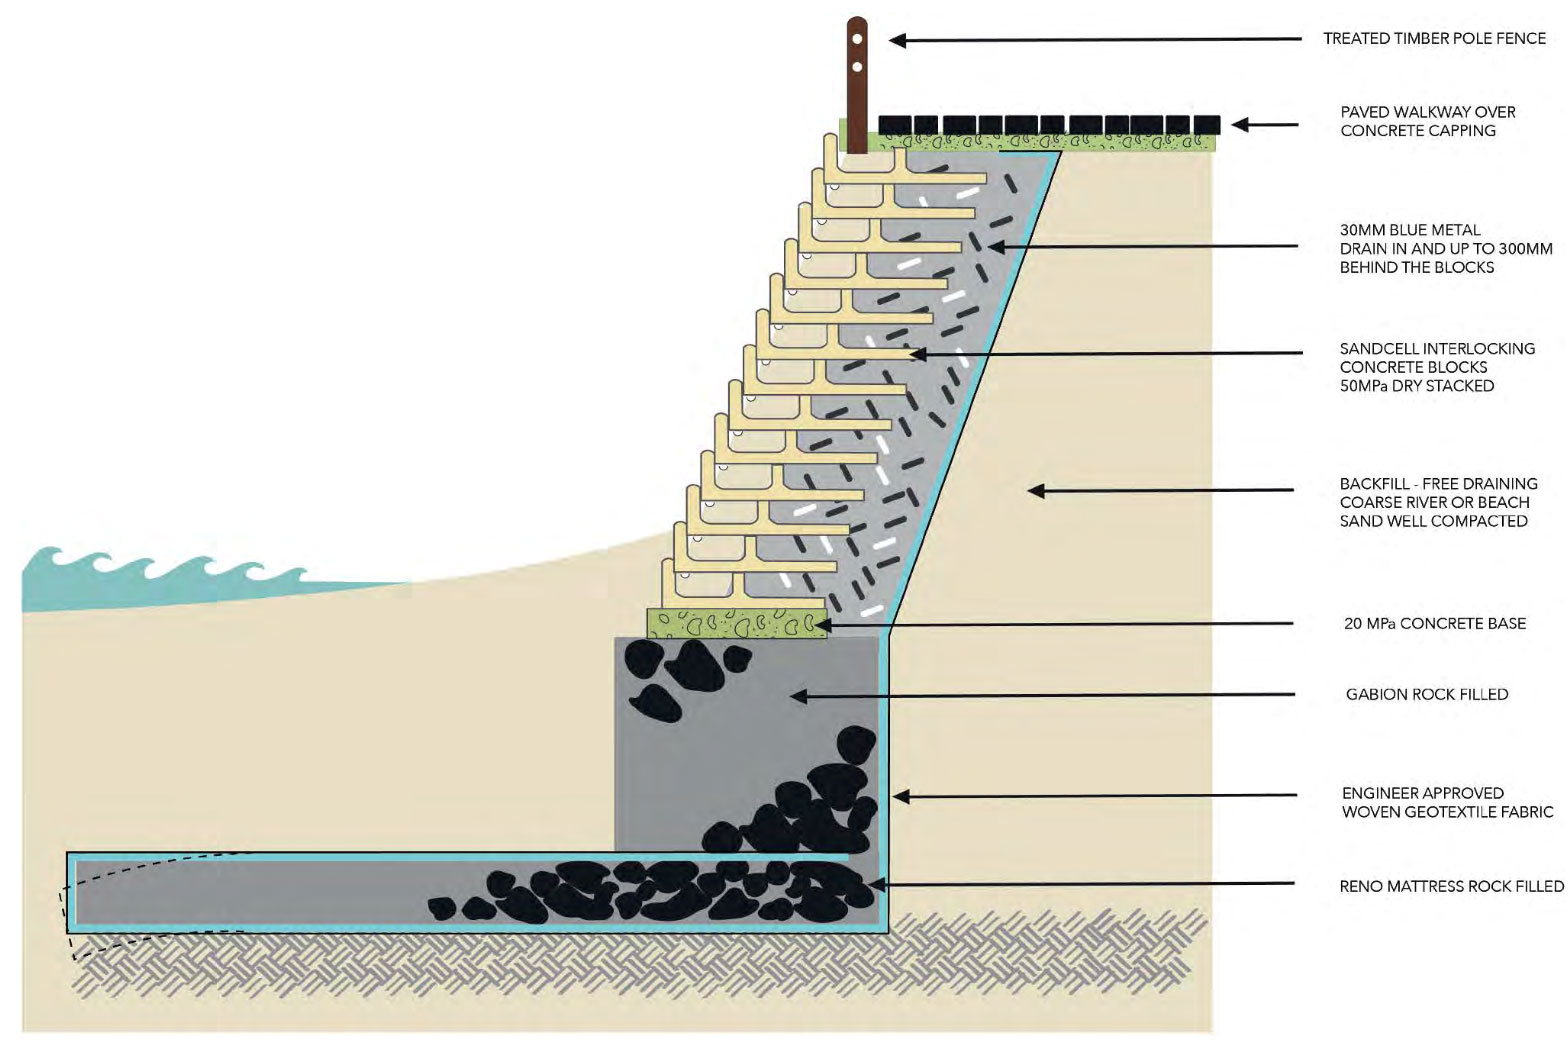 Coastal Erosion Diagram